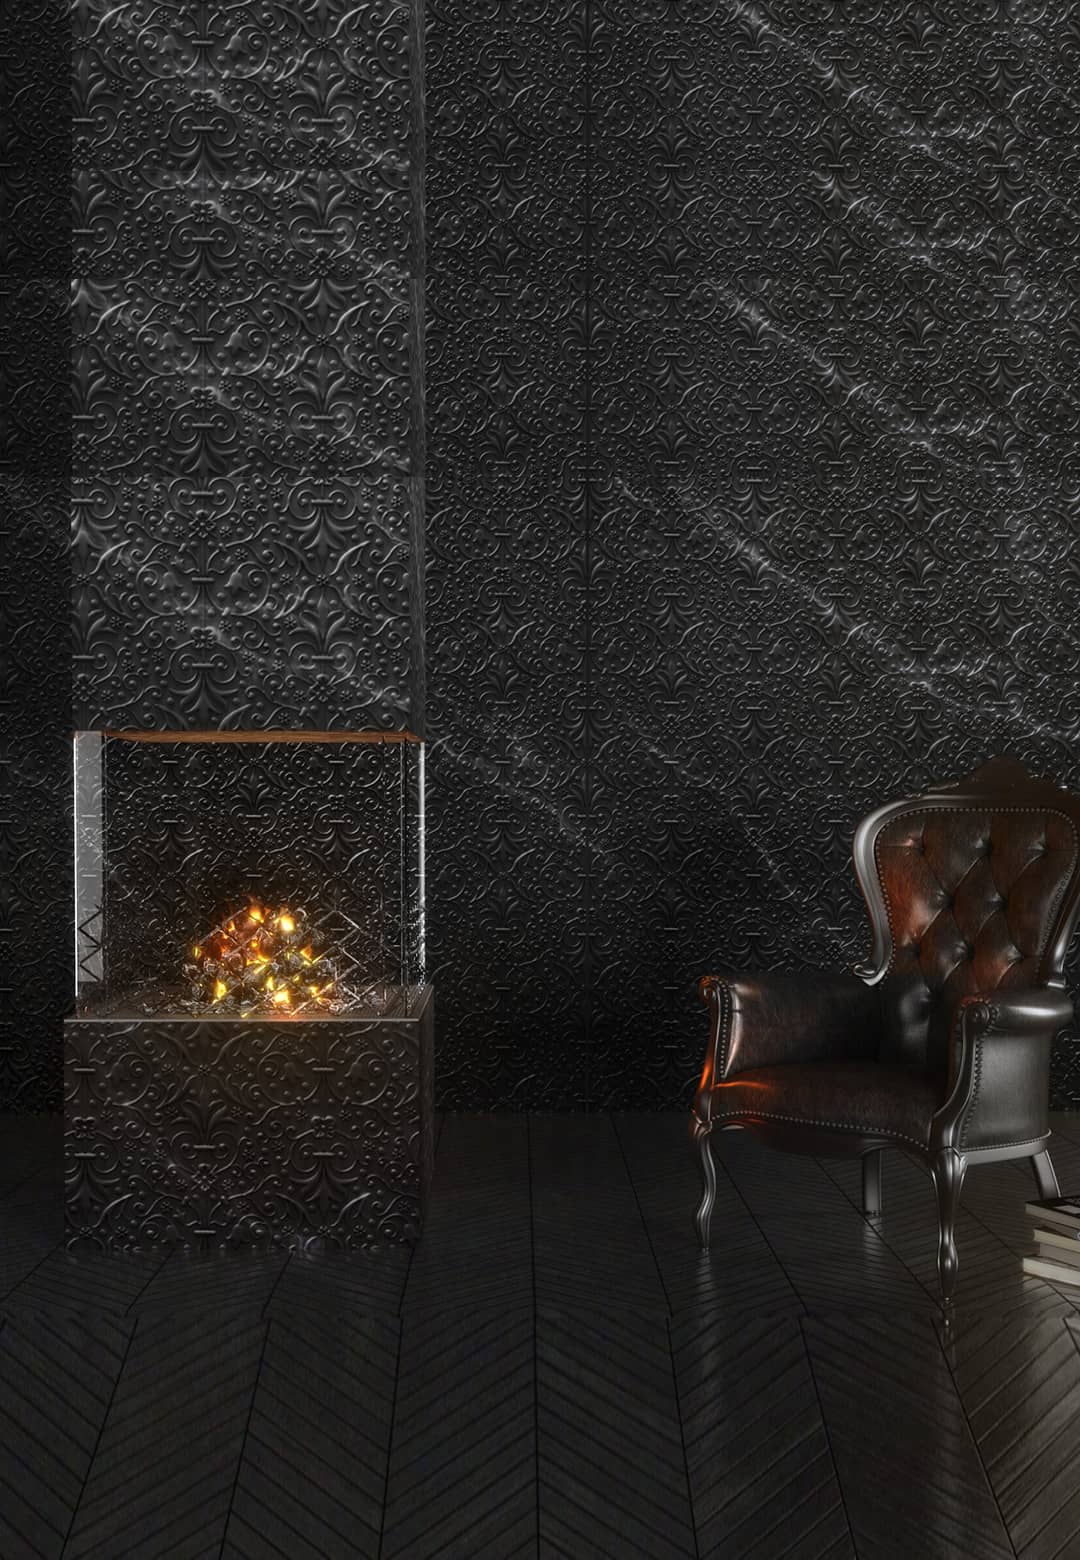 Marcel Wanders studio designs new fireplace for Element4